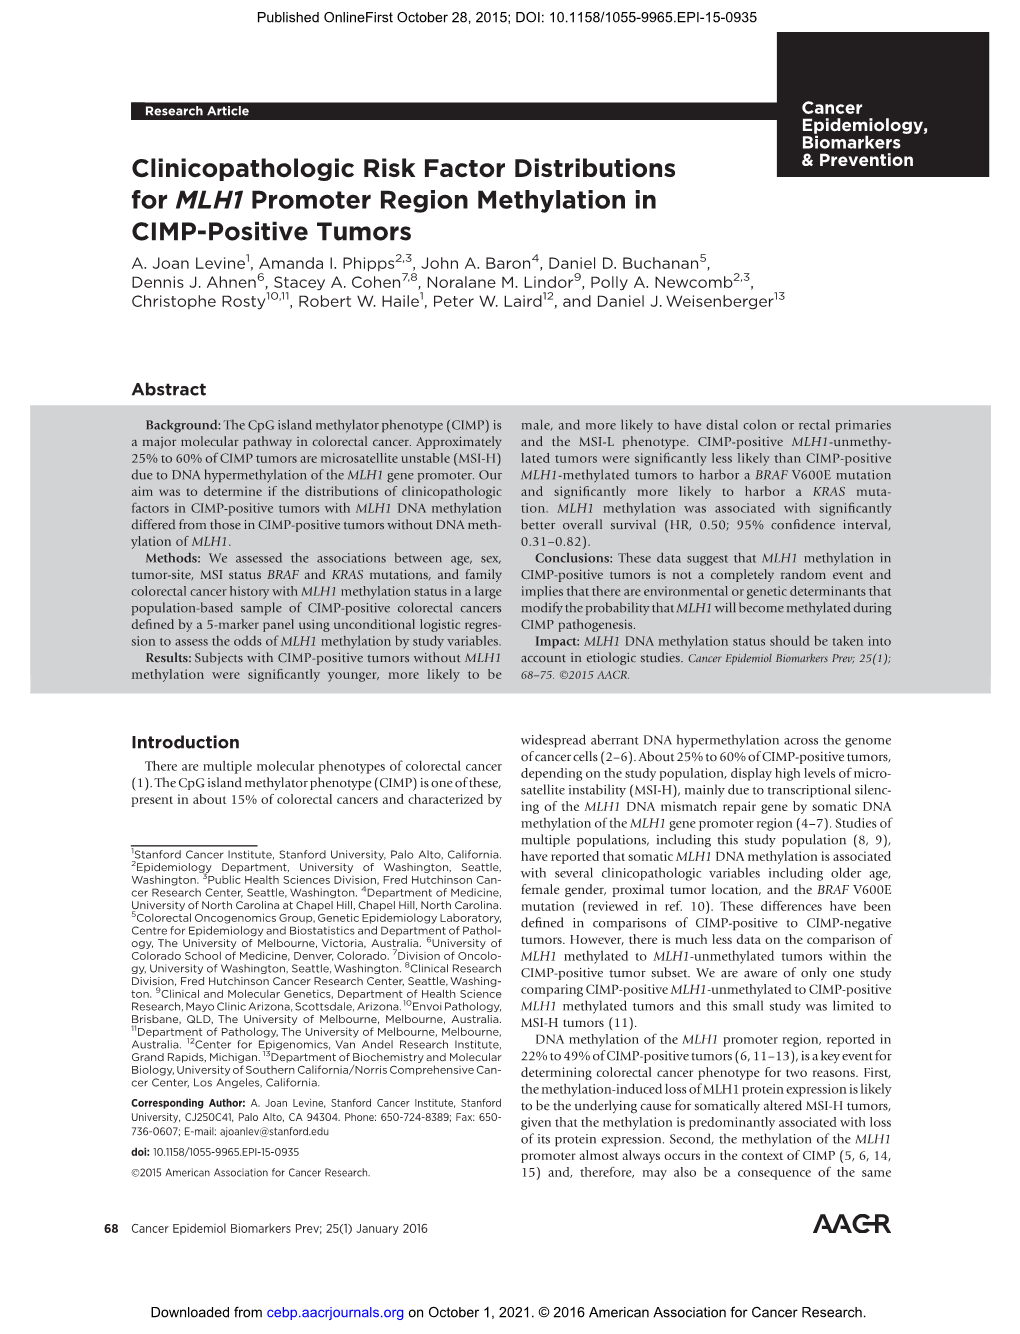 Clinicopathologic Risk Factor Distributions for MLH1 Promoter Region Methylation in CIMP-Positive Tumors